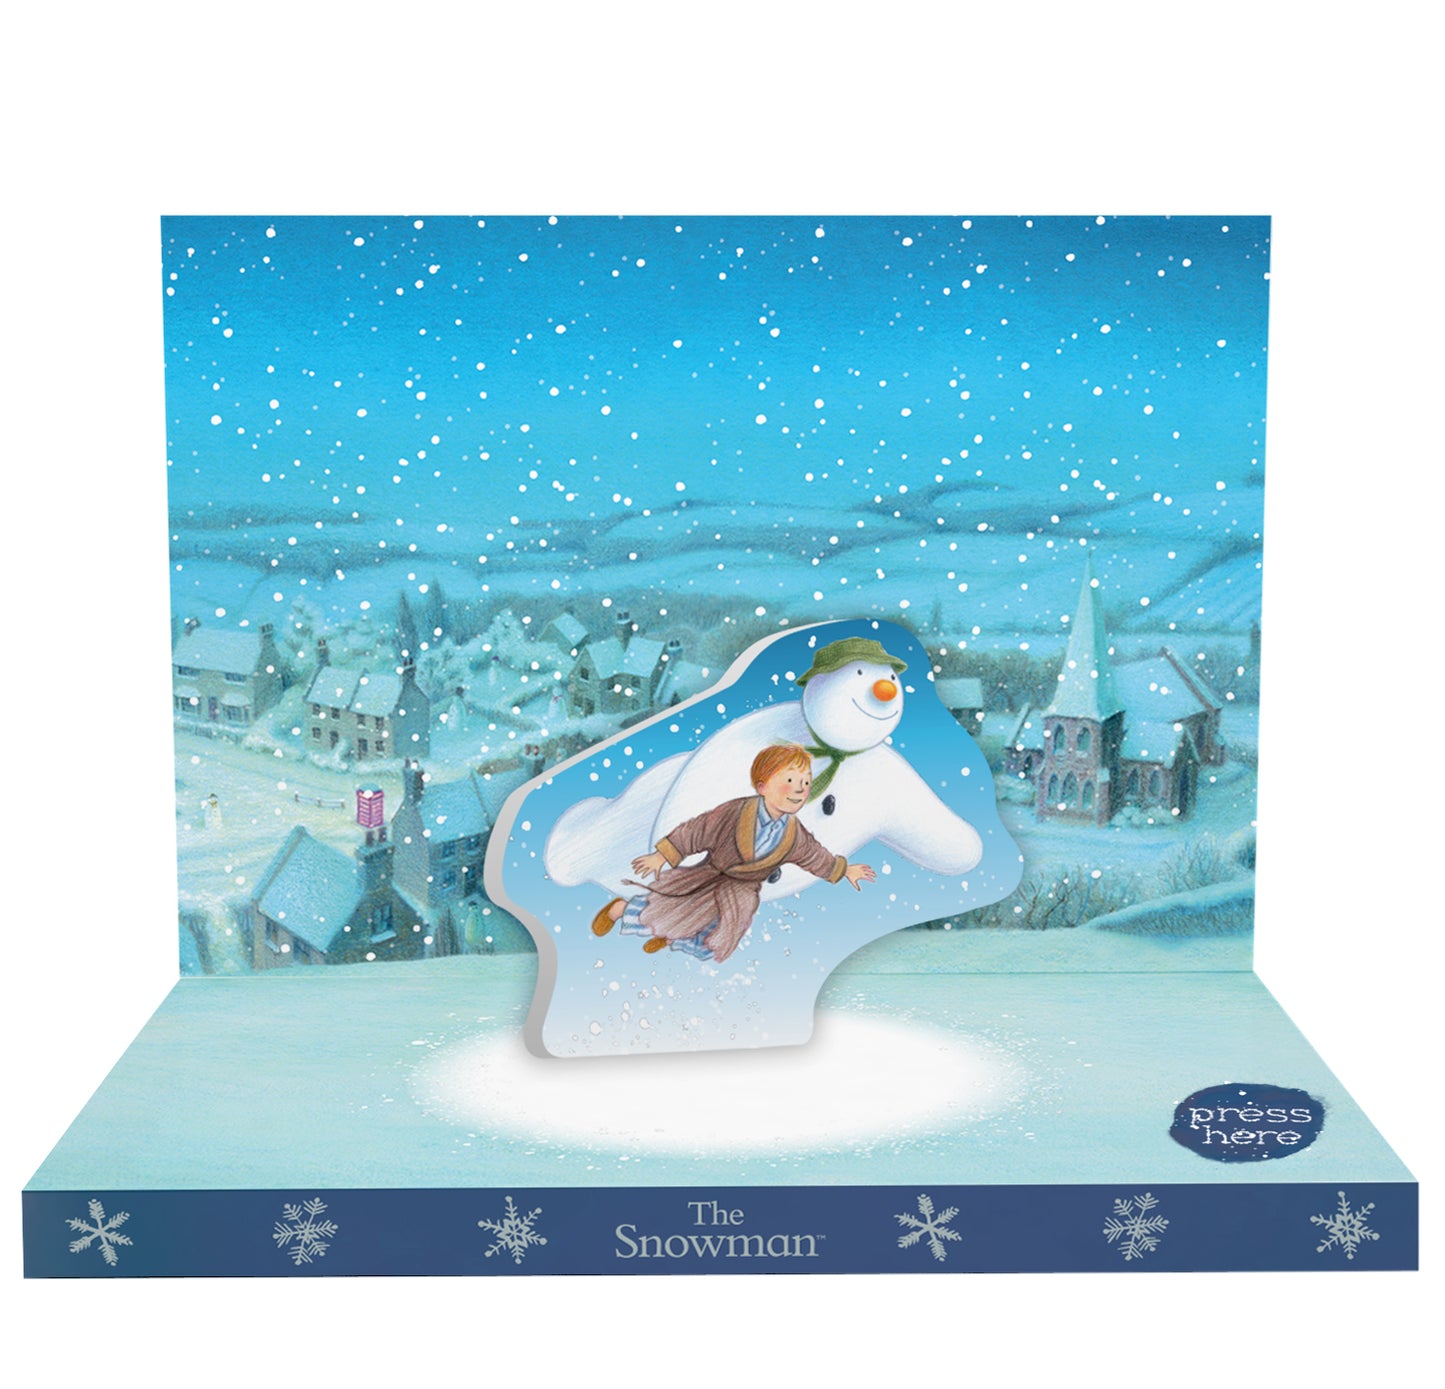 The Snowman Music Box Card Novelty Dancing Musical Christmas Card